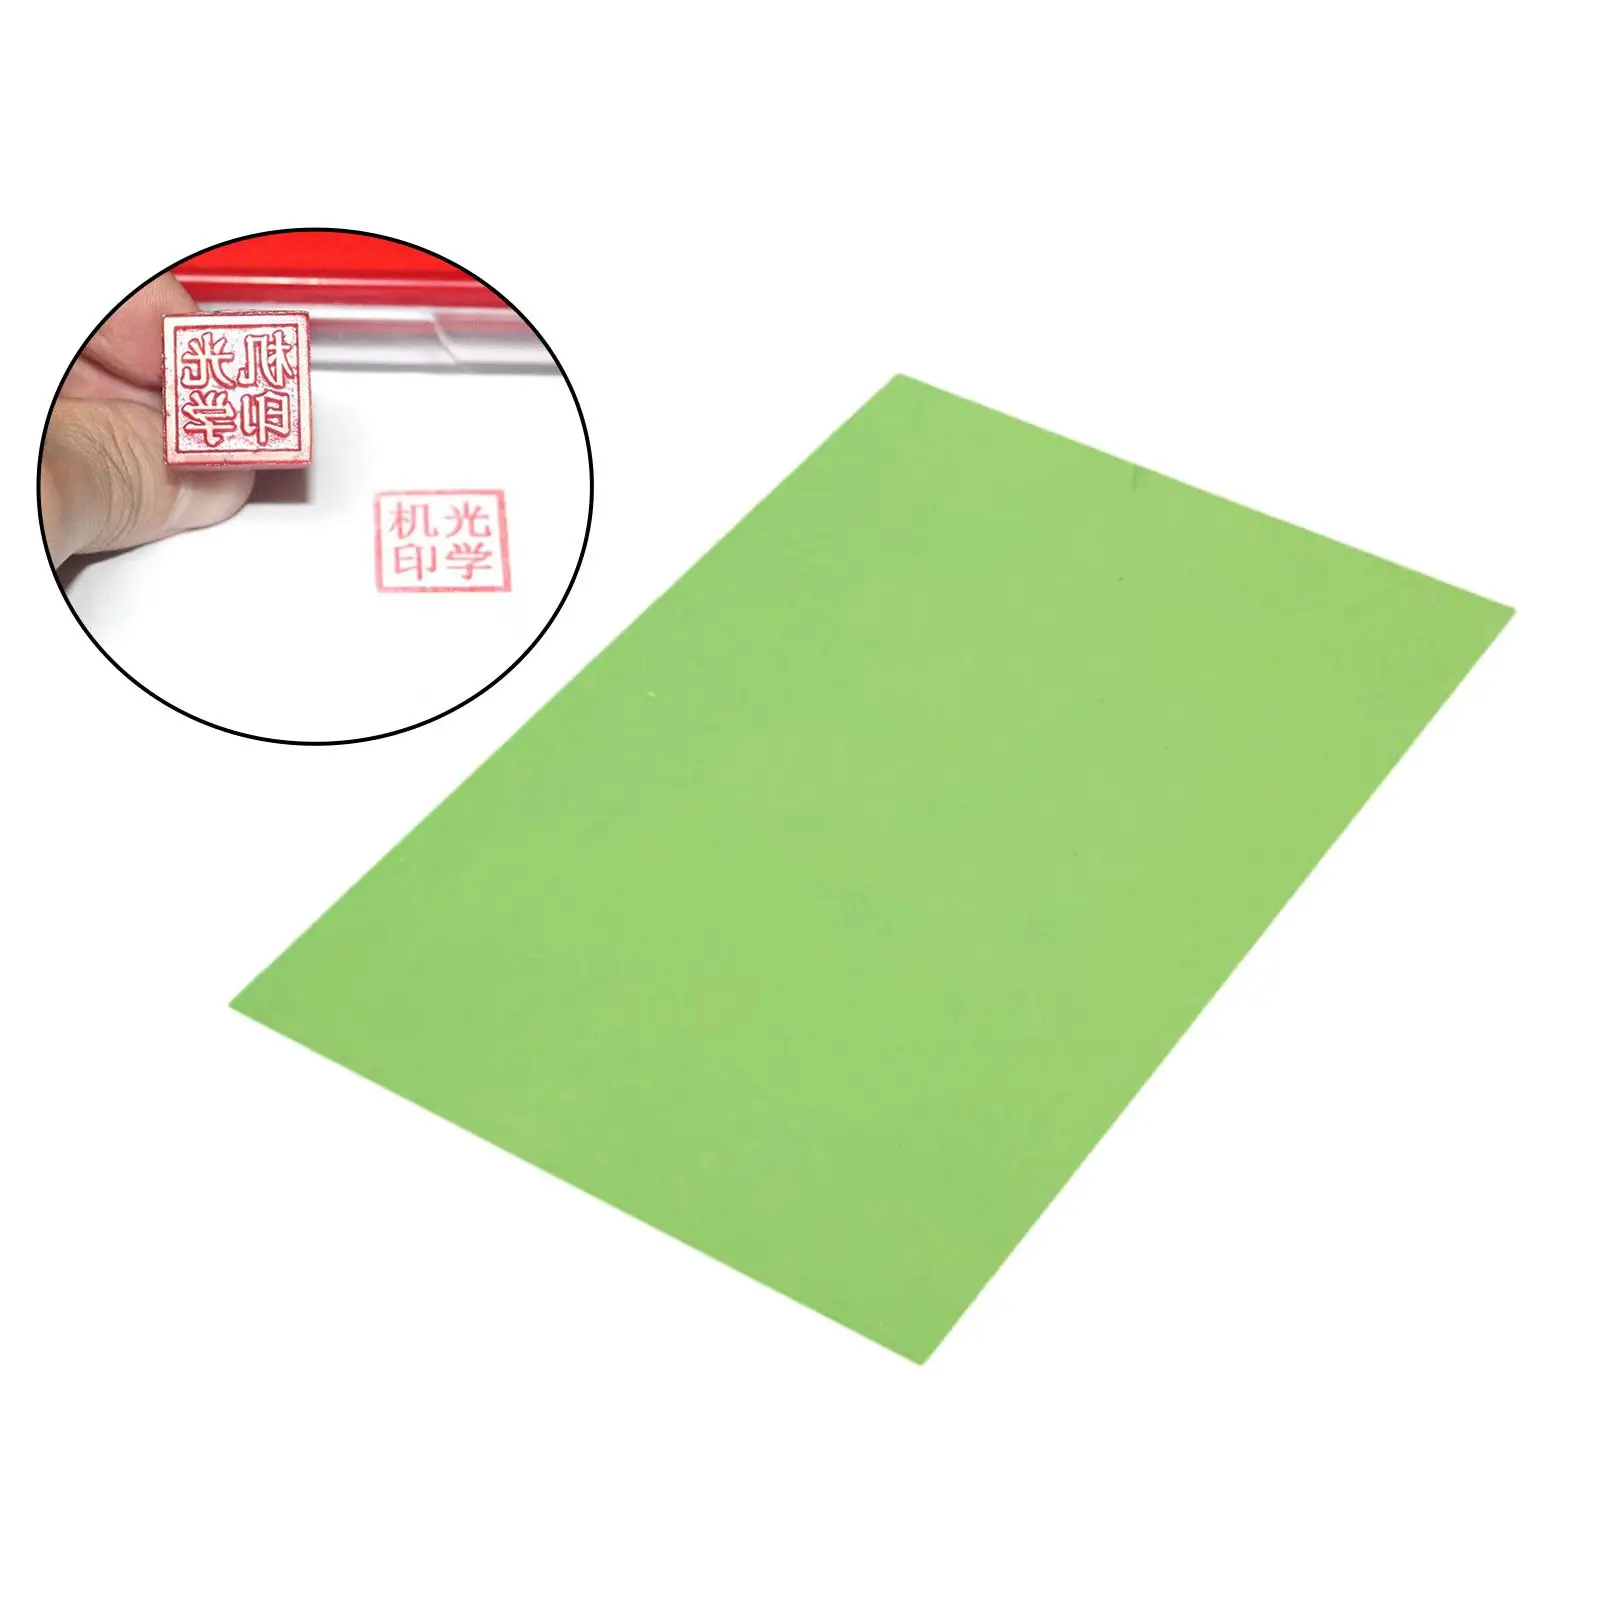 1 Sheet Photopolymer Plte, Resin     Sheet Letterpress Polymer